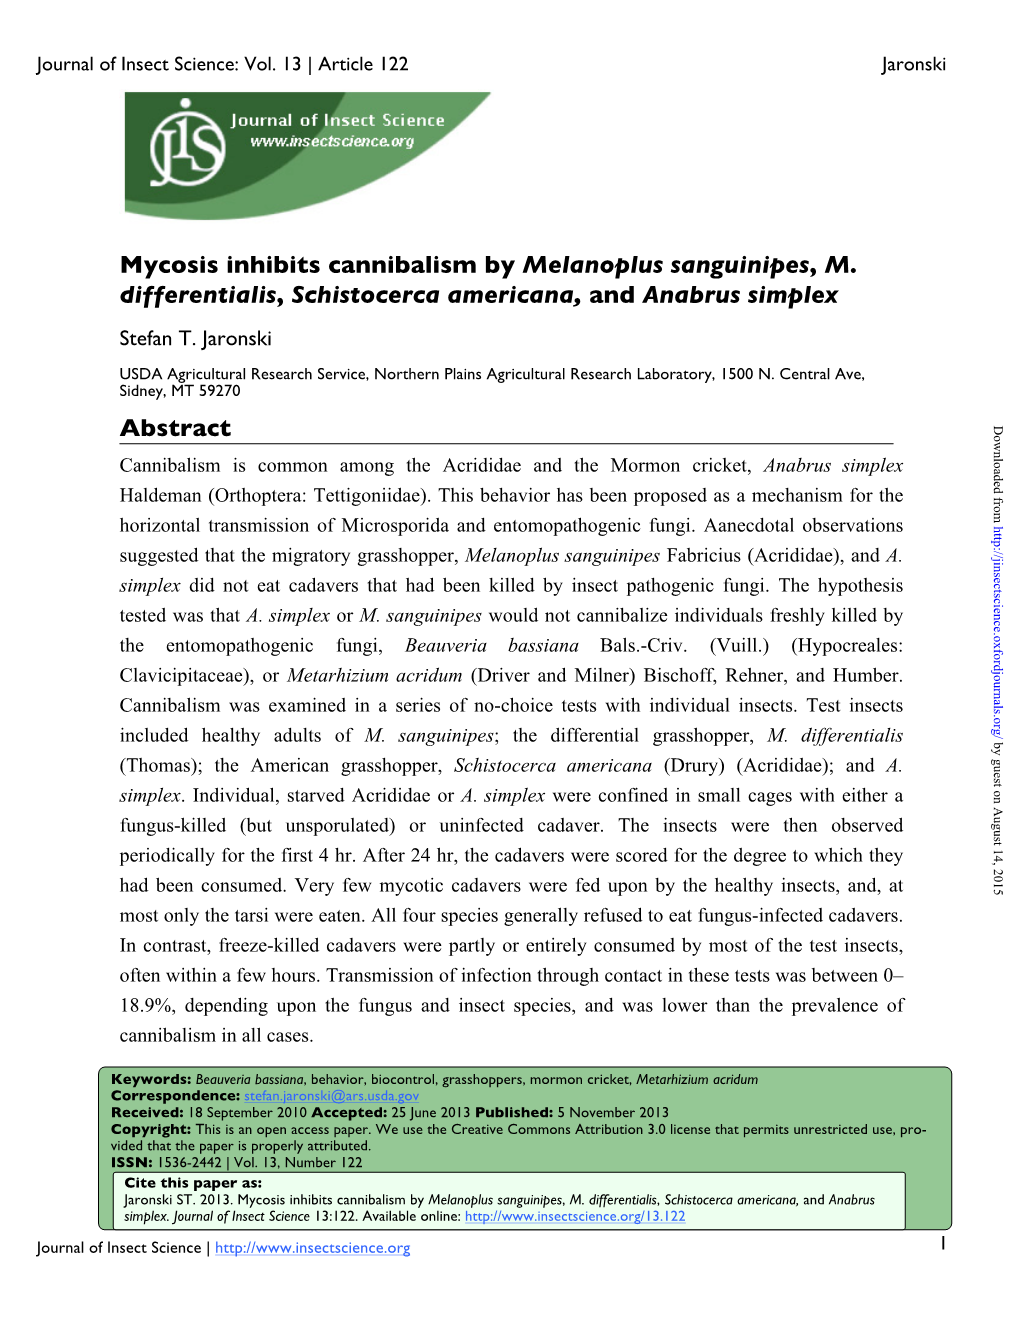 Mycosis Inhibits Cannibalism by Melanoplus Sanguinipes, M